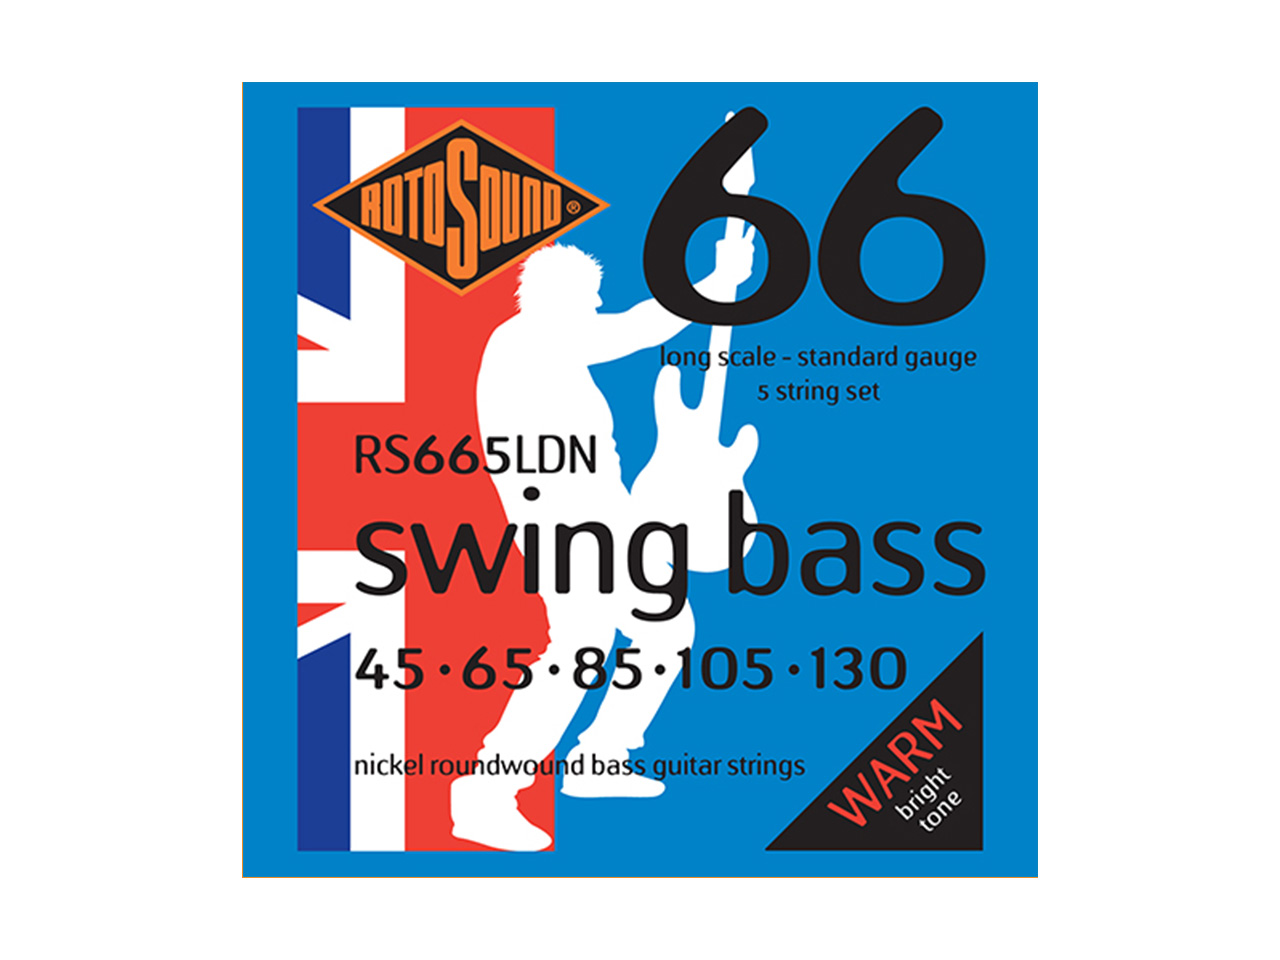 ROTOSOUND ( ロトサウンド ) SWING BASS 66 5-STRING Standard Nickel Roundwound / RS665LDN 45-130 (エレキベース弦/LONG SCALE)